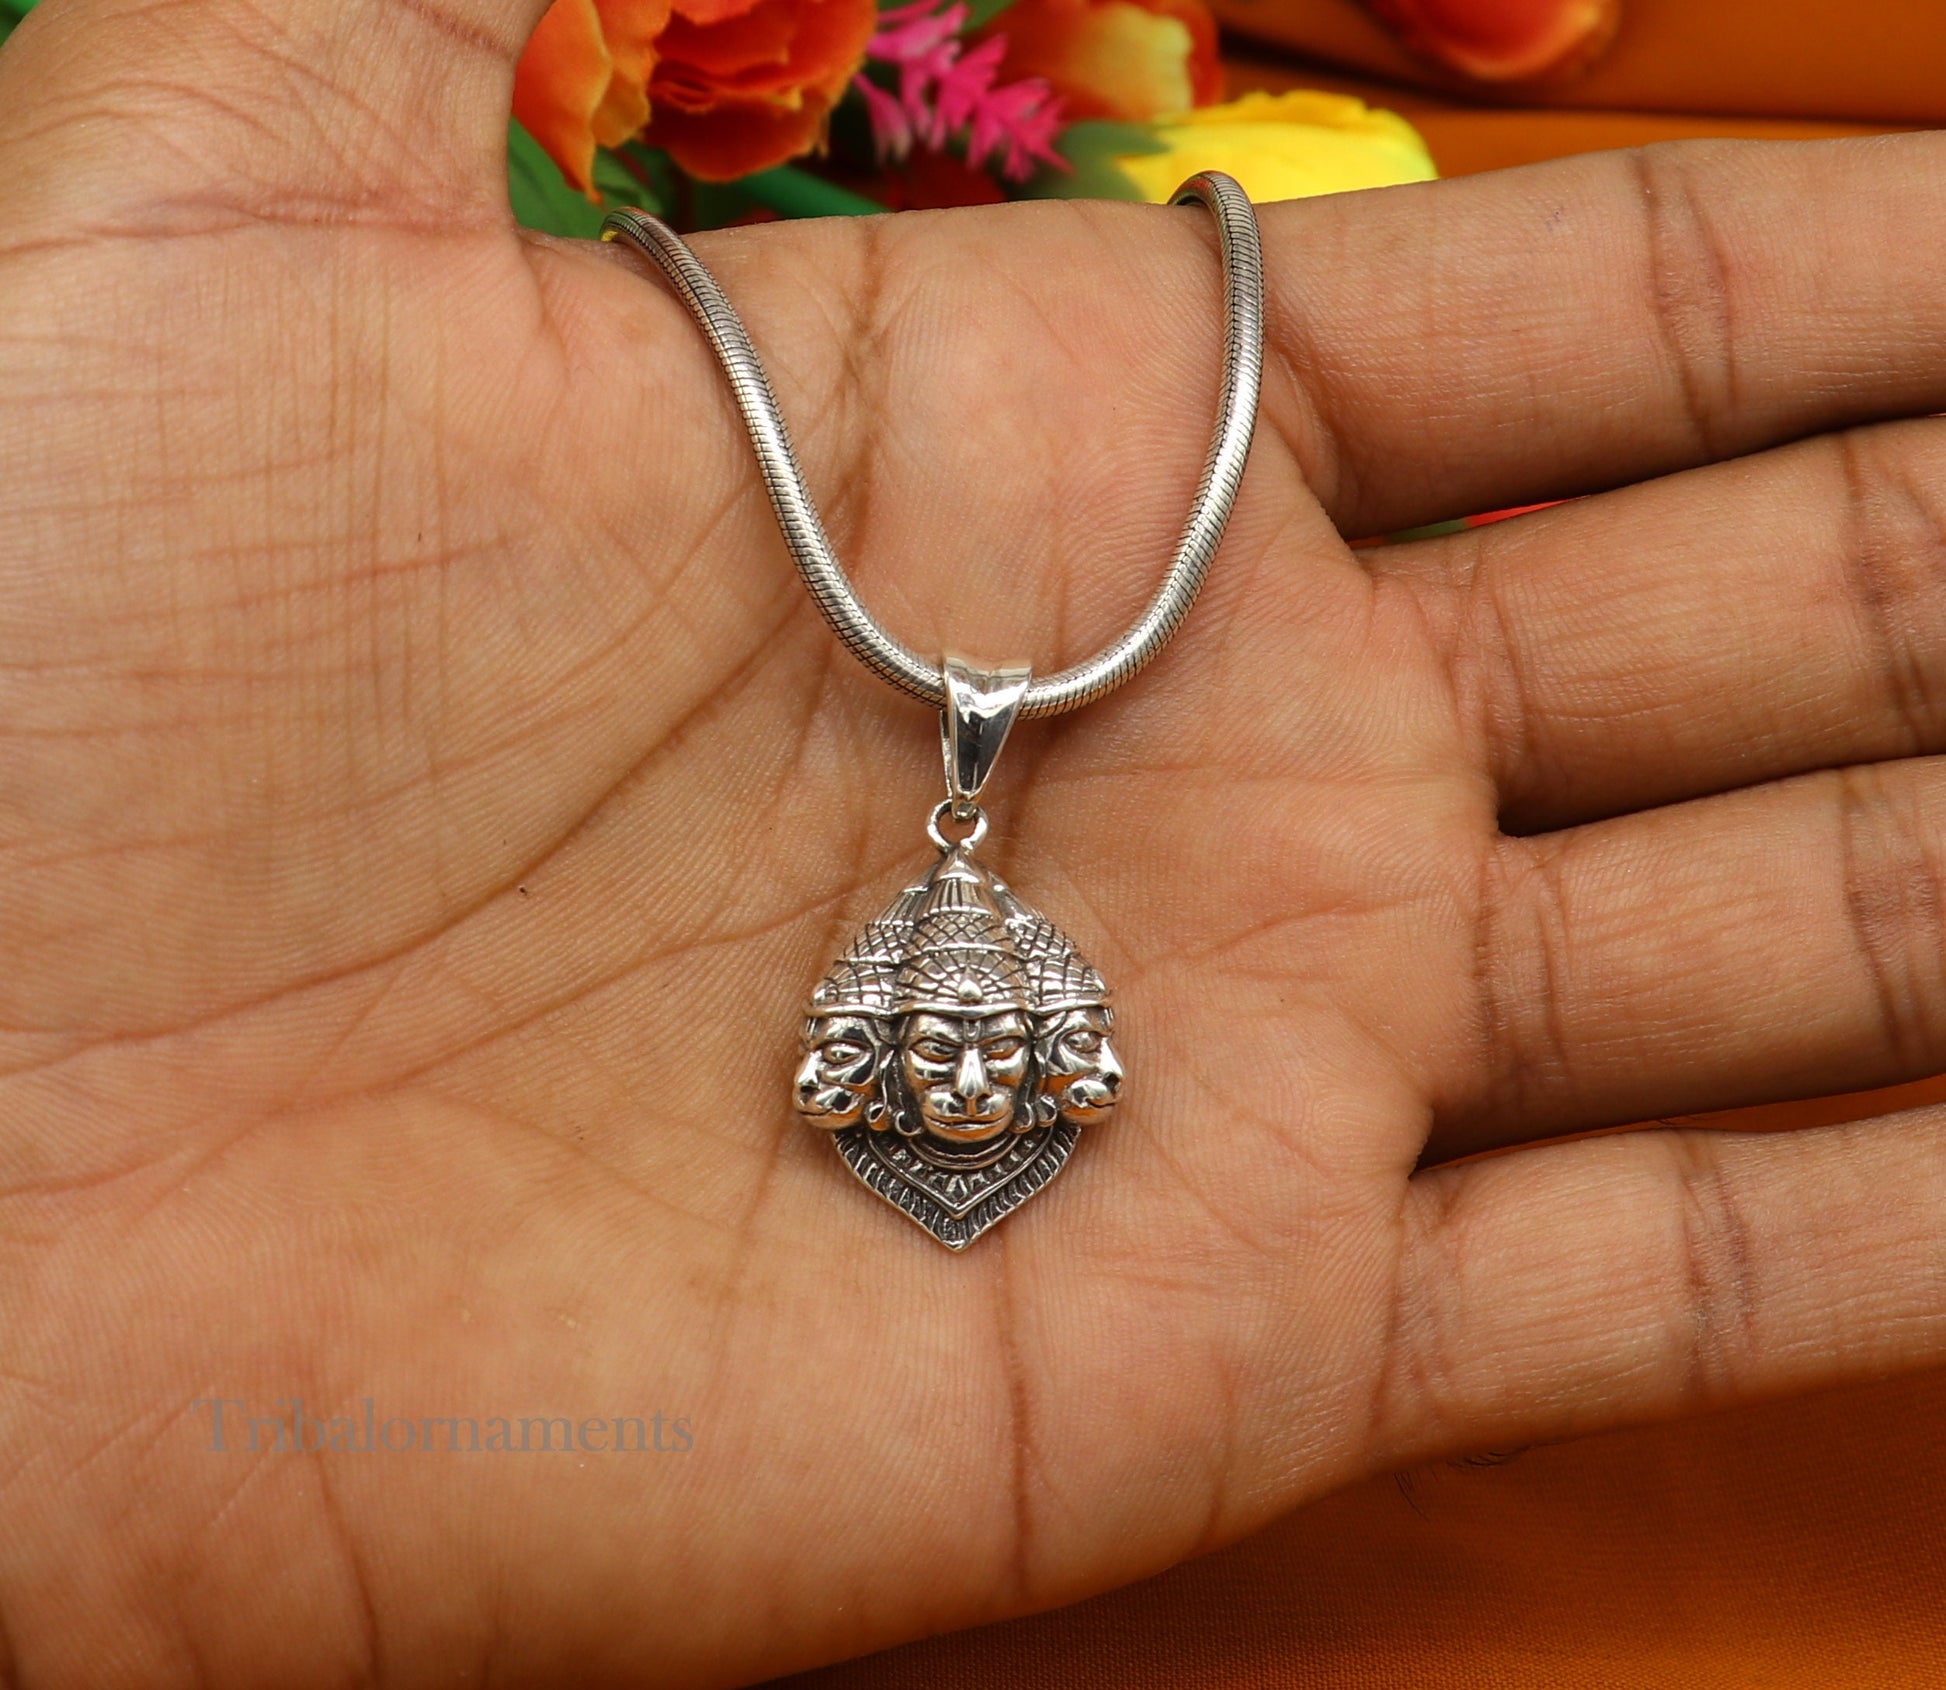 God hanuman pendant 92.5 sterling silver handmade god idol teen mukhi or three face hanuman pendant, amazing pendant gifting jewelry ssp994 - TRIBAL ORNAMENTS